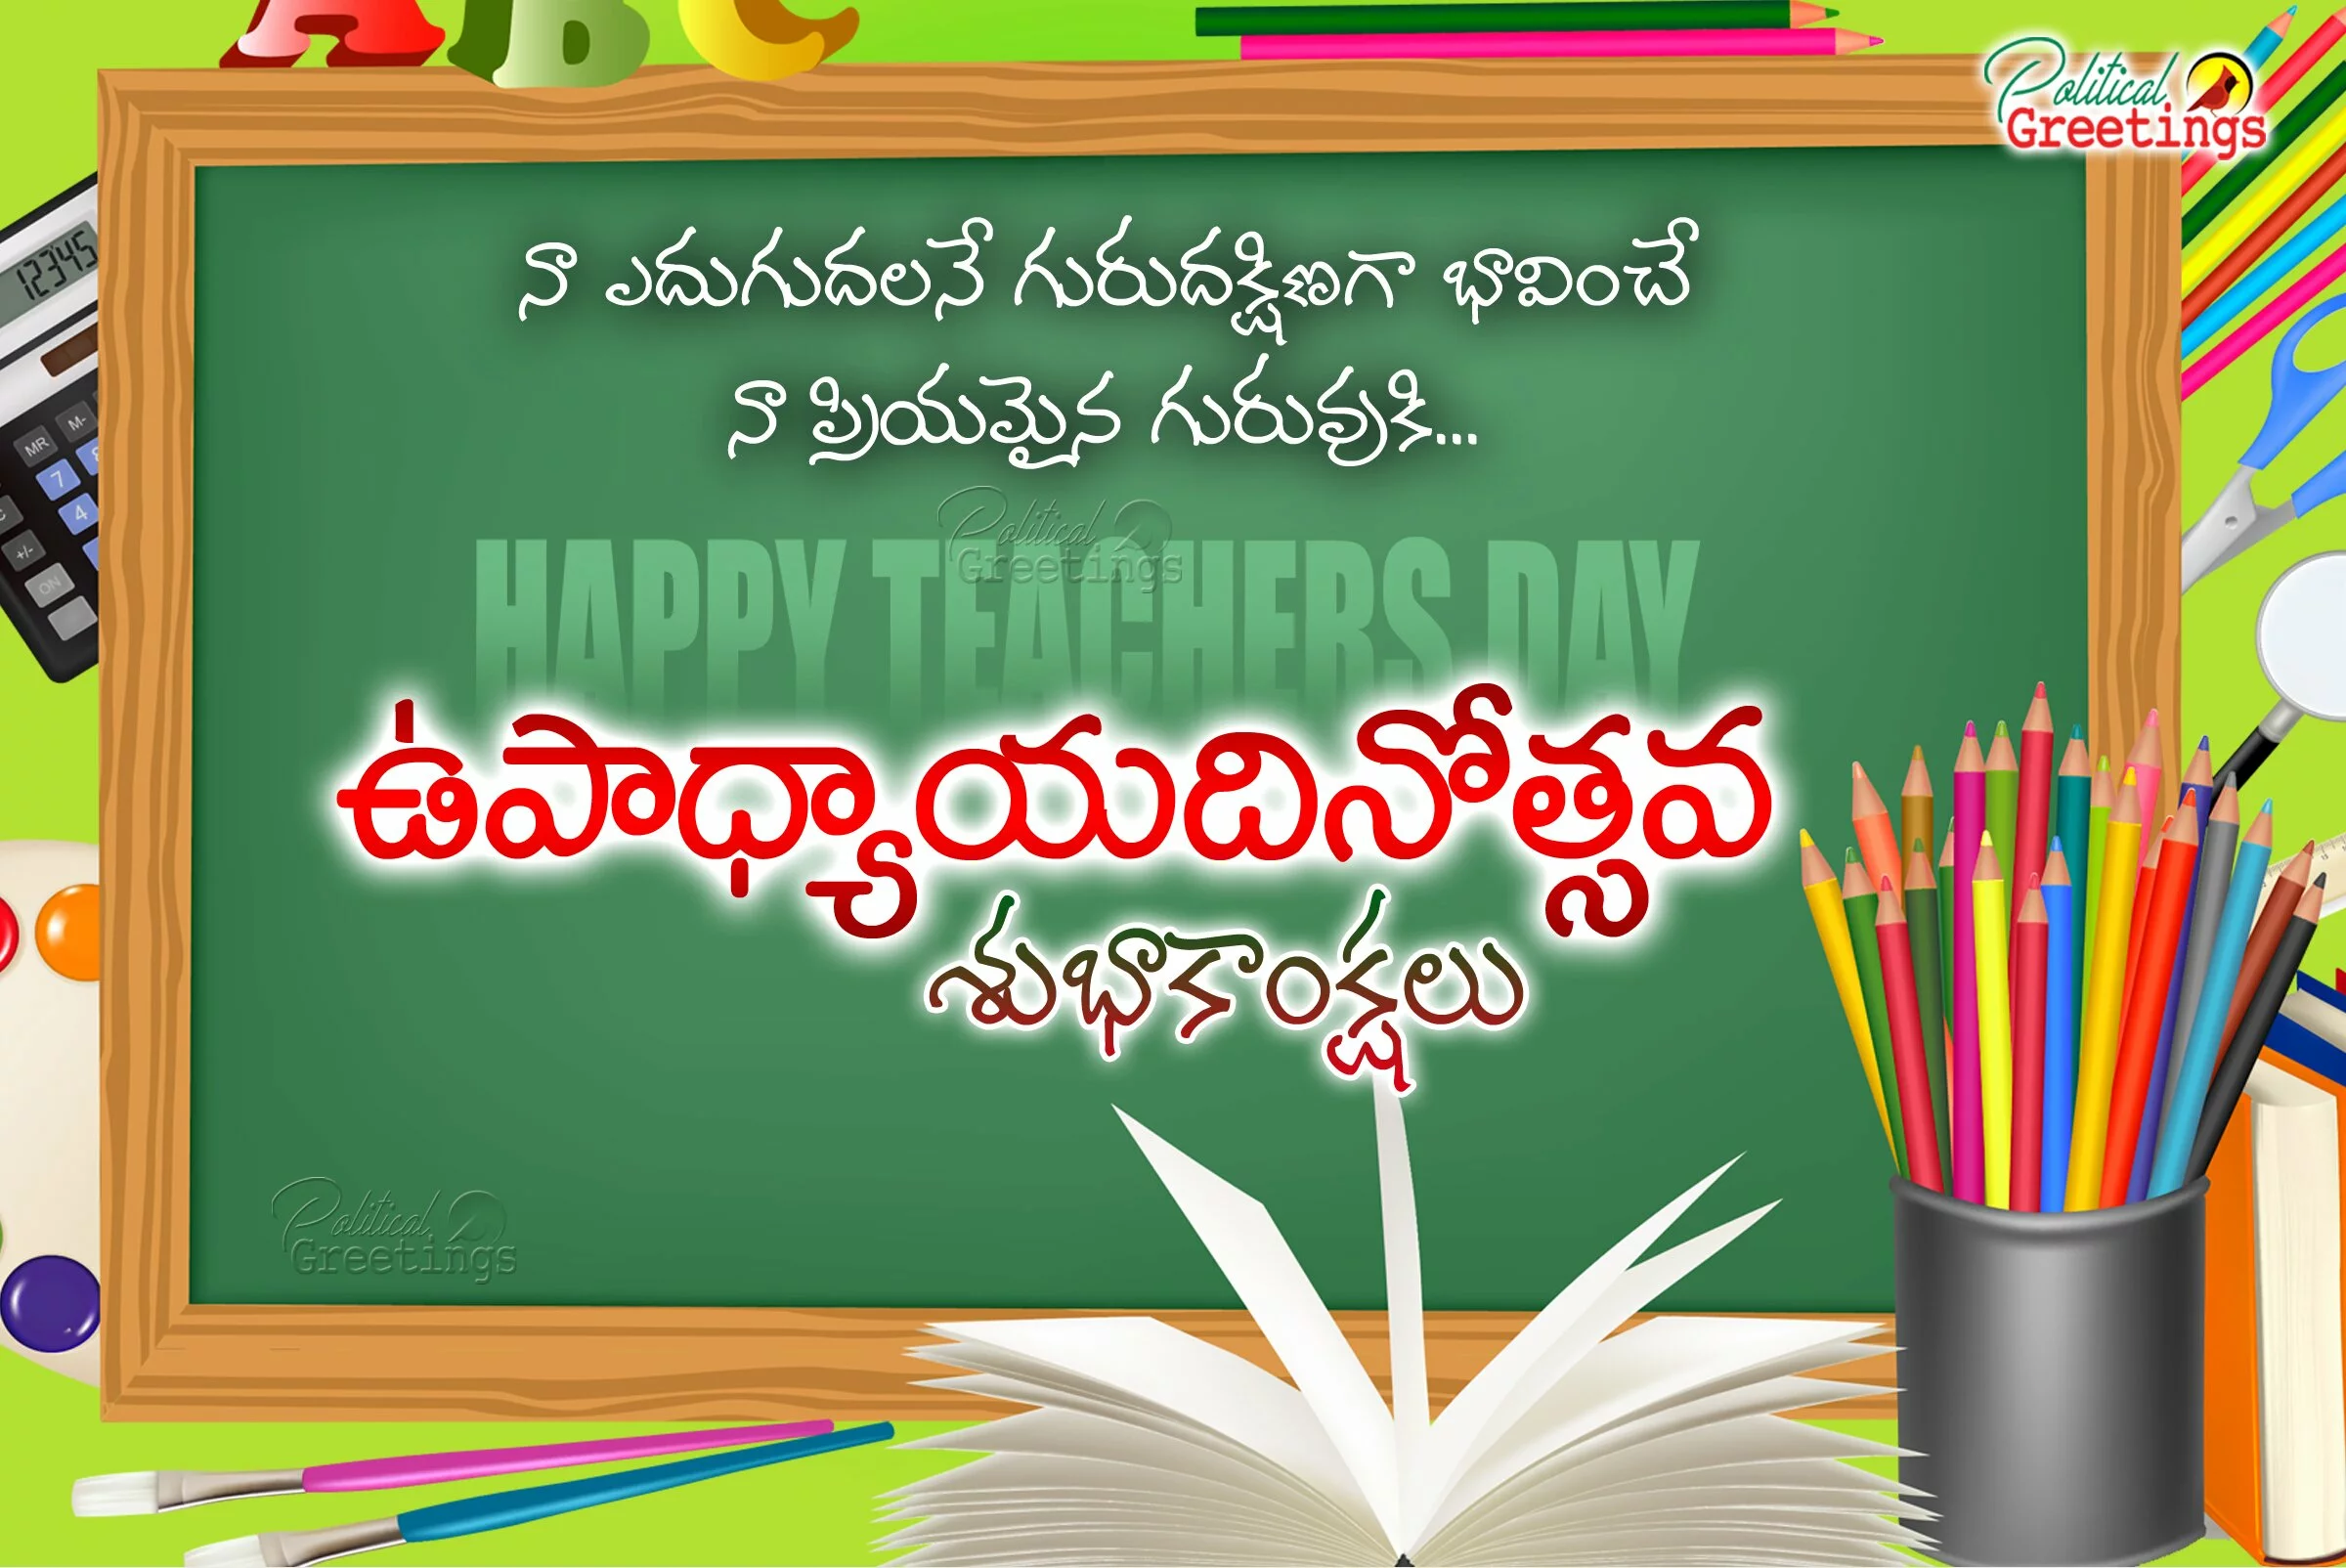 September 5th Happy Teachers Day Greetings hd wallpapers in Telugu Language